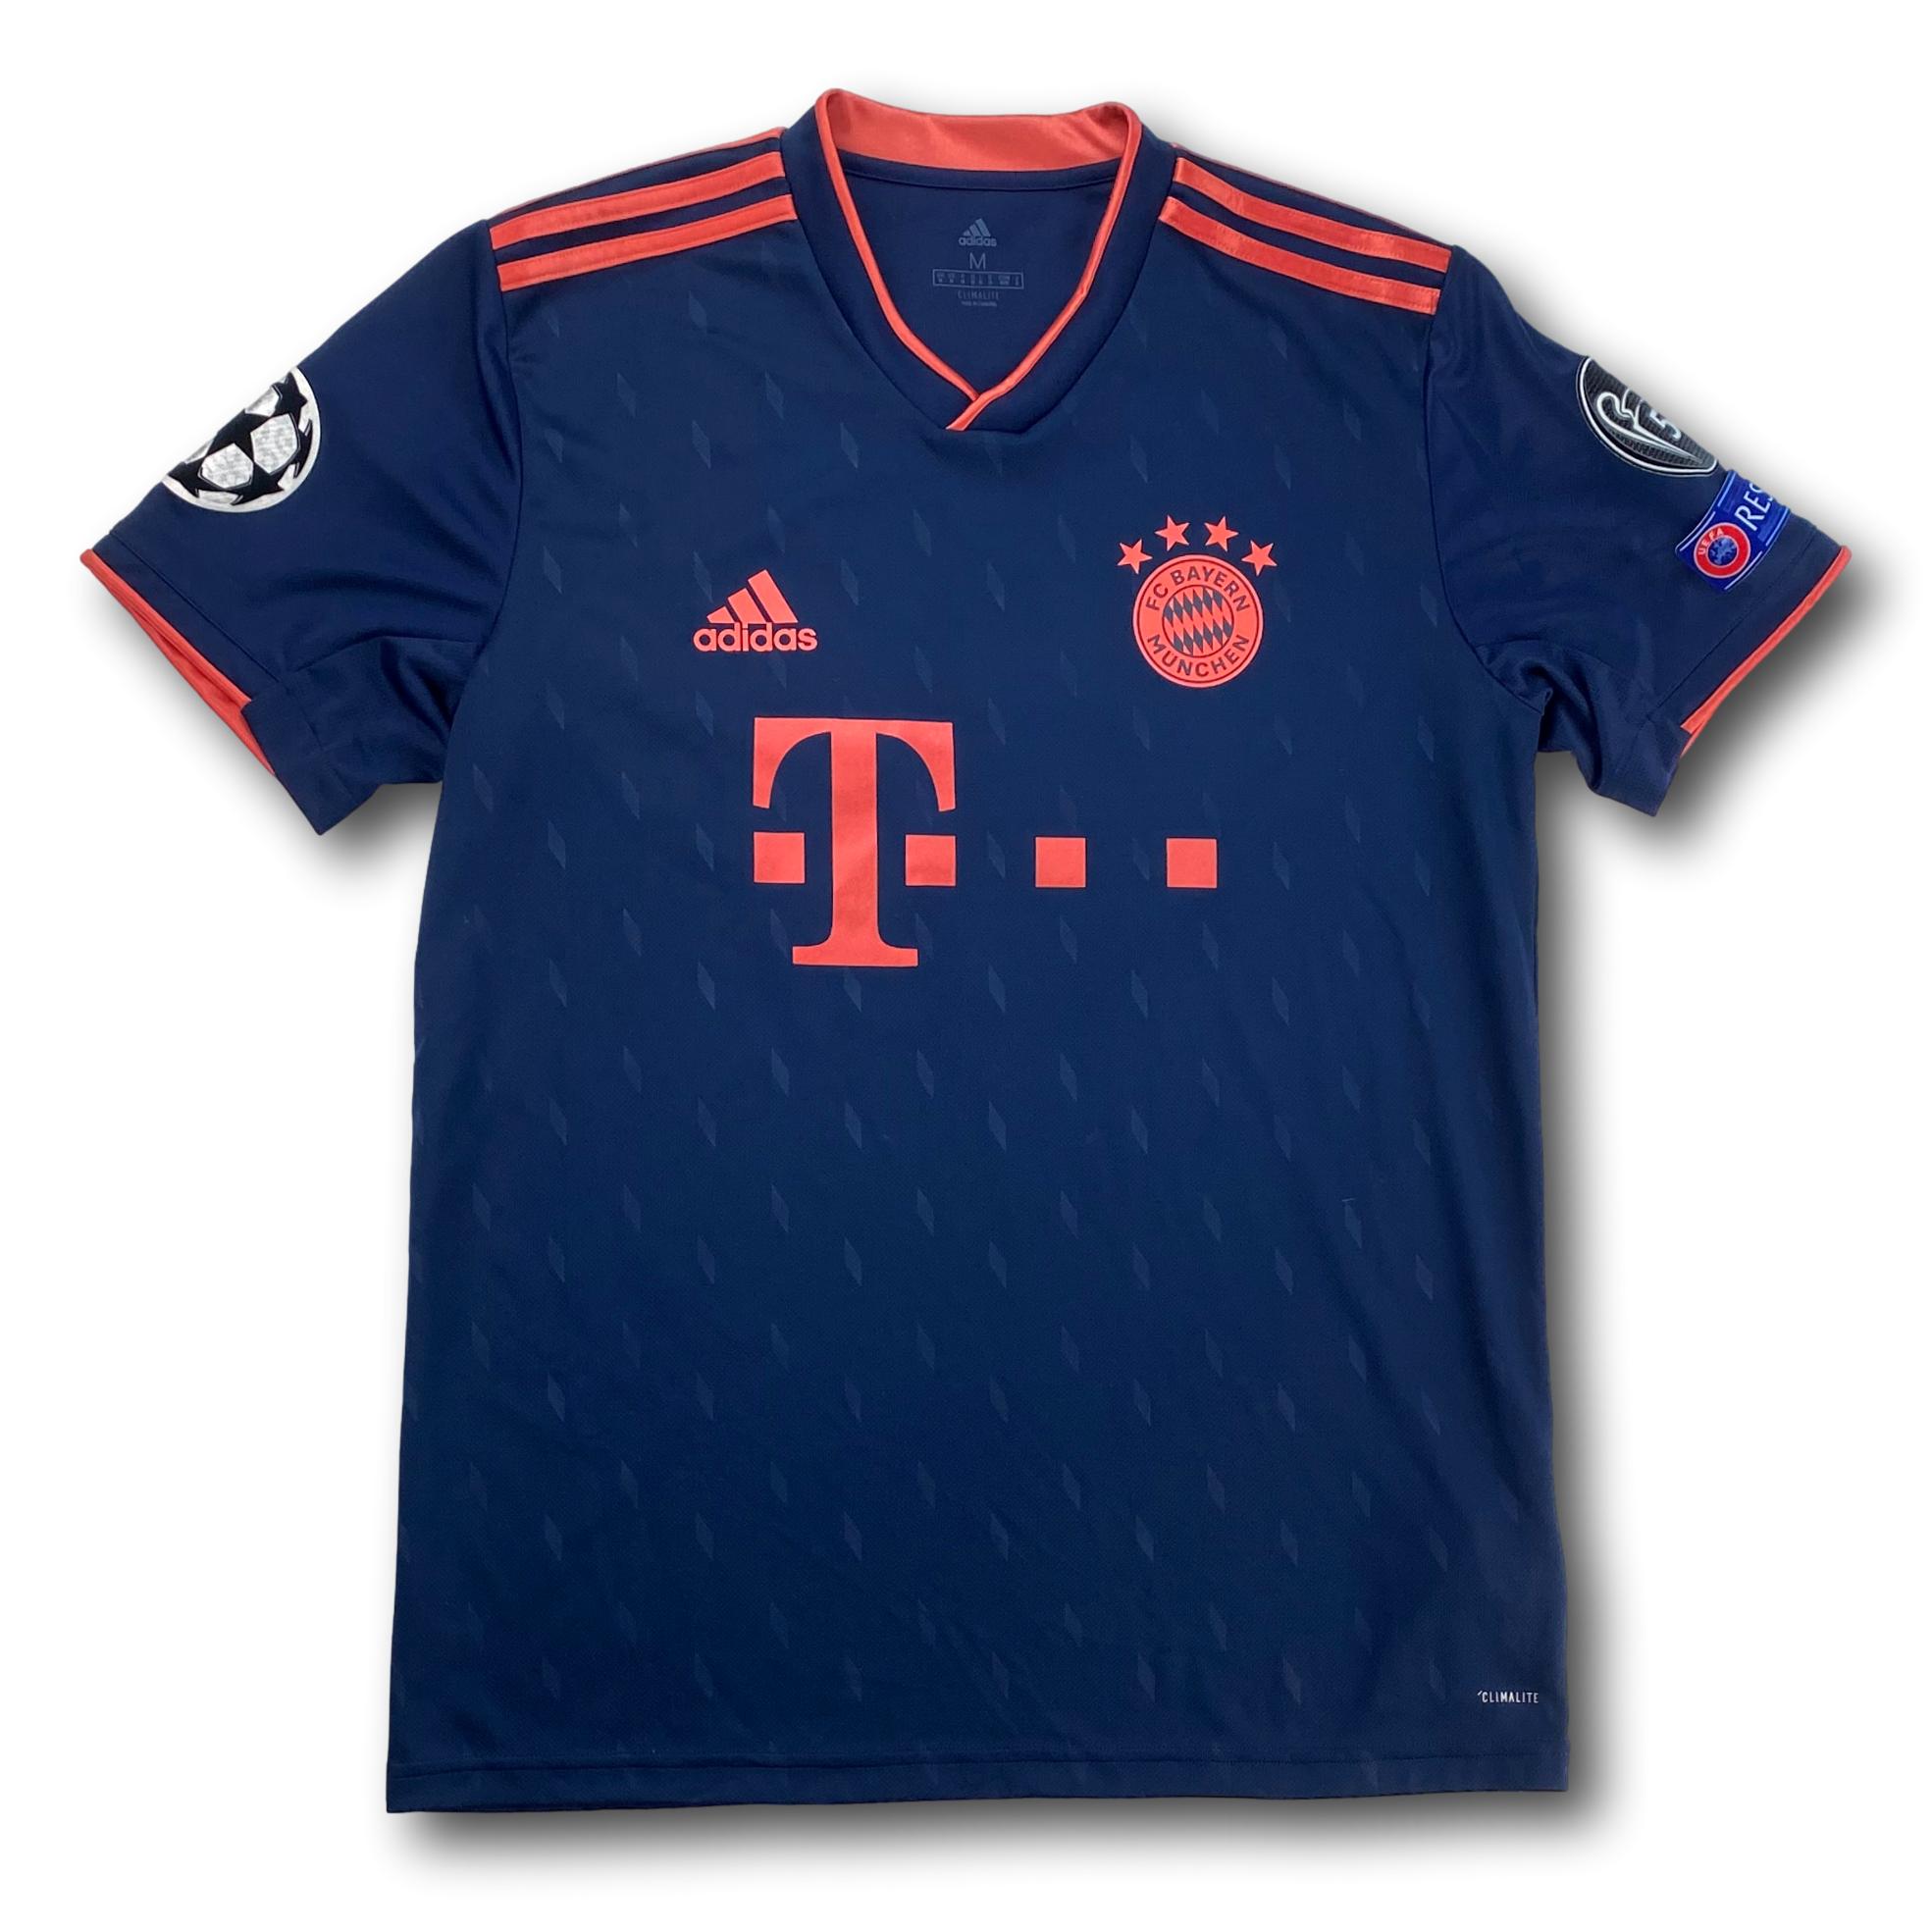 FC Bayern München 2019-20 Drittes M adidas Coutinho #10